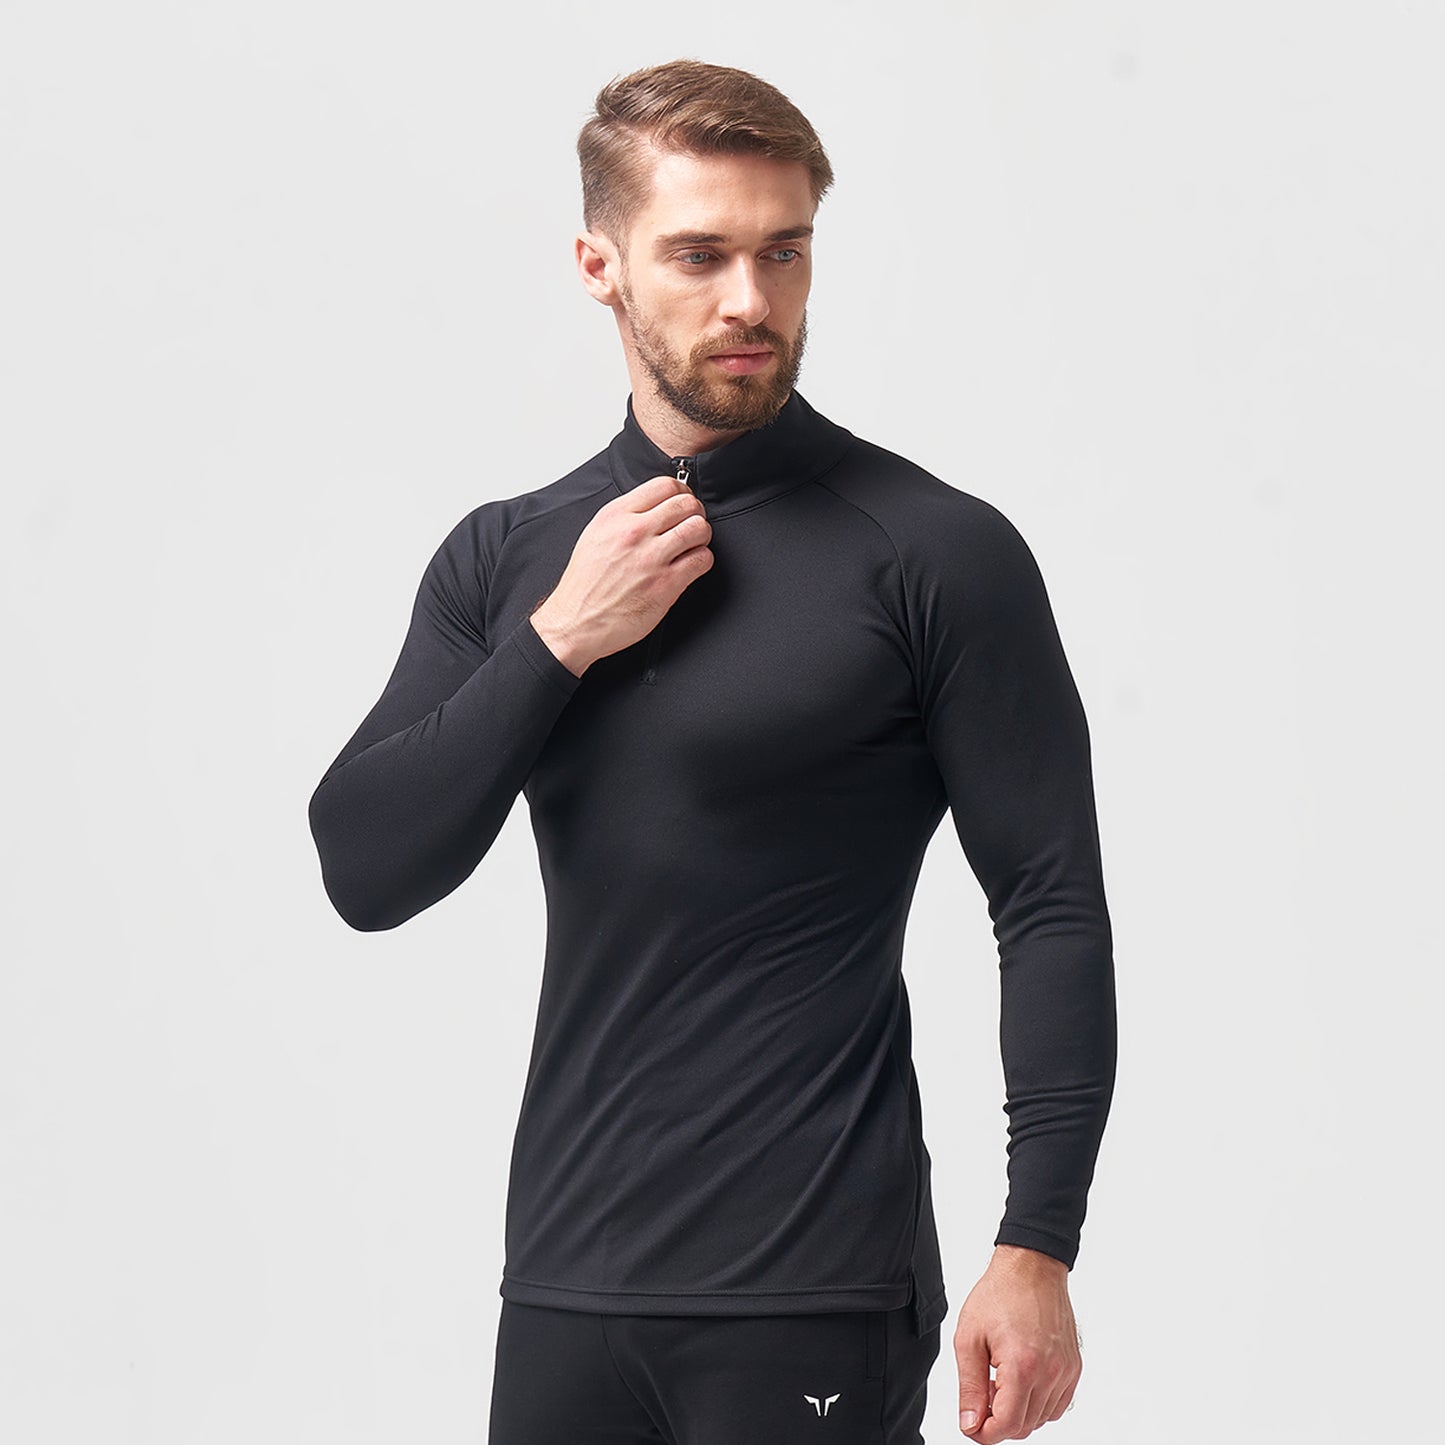 squatwolf-gym-long-sleeves-code-urban-running-top-black-running-tops-for-men